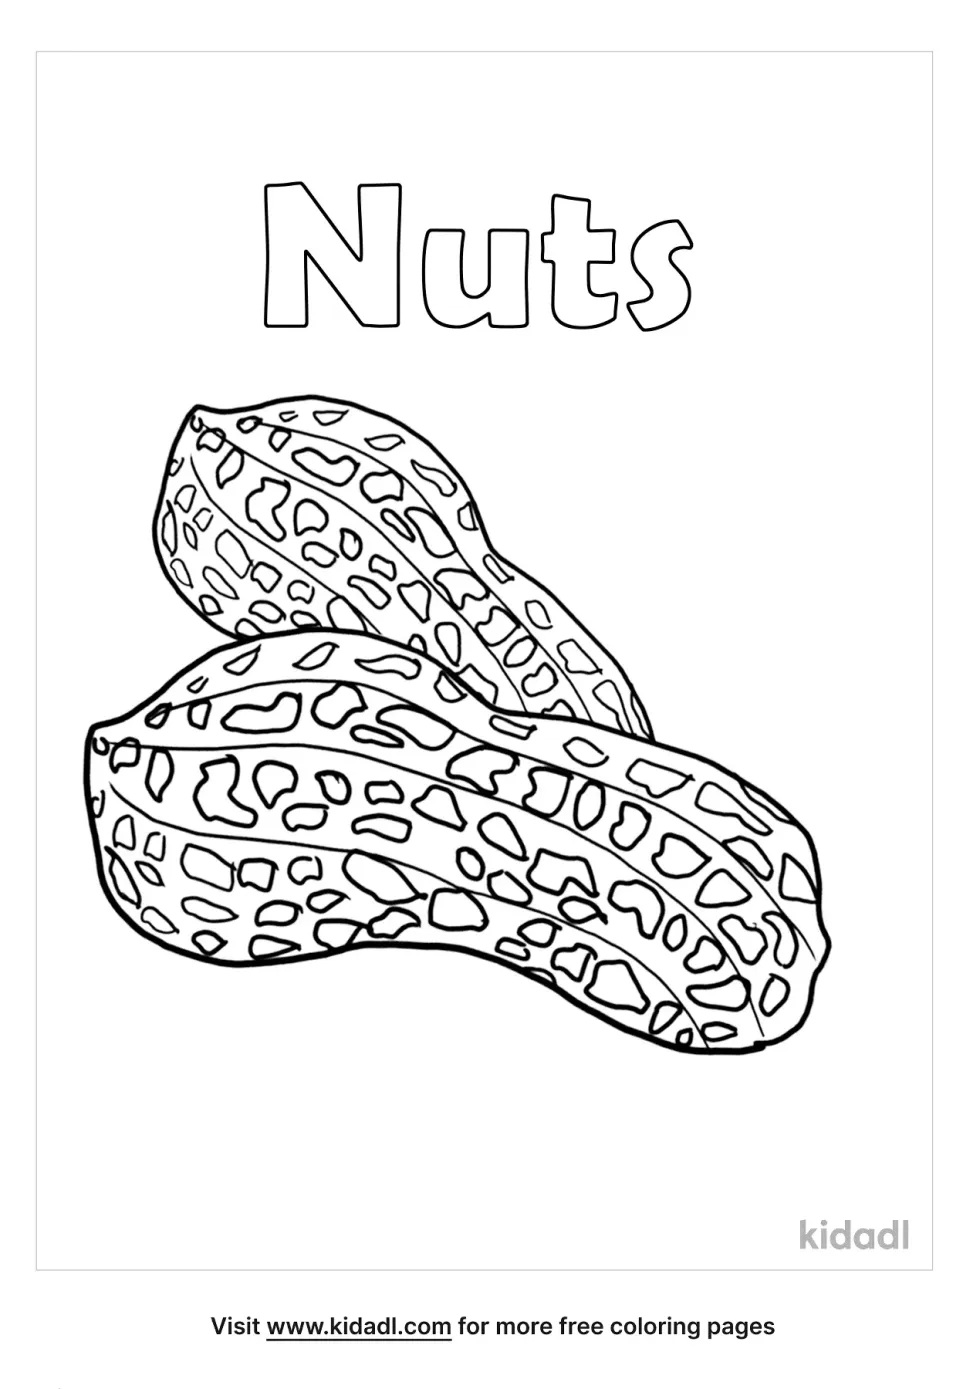 2 Nuts